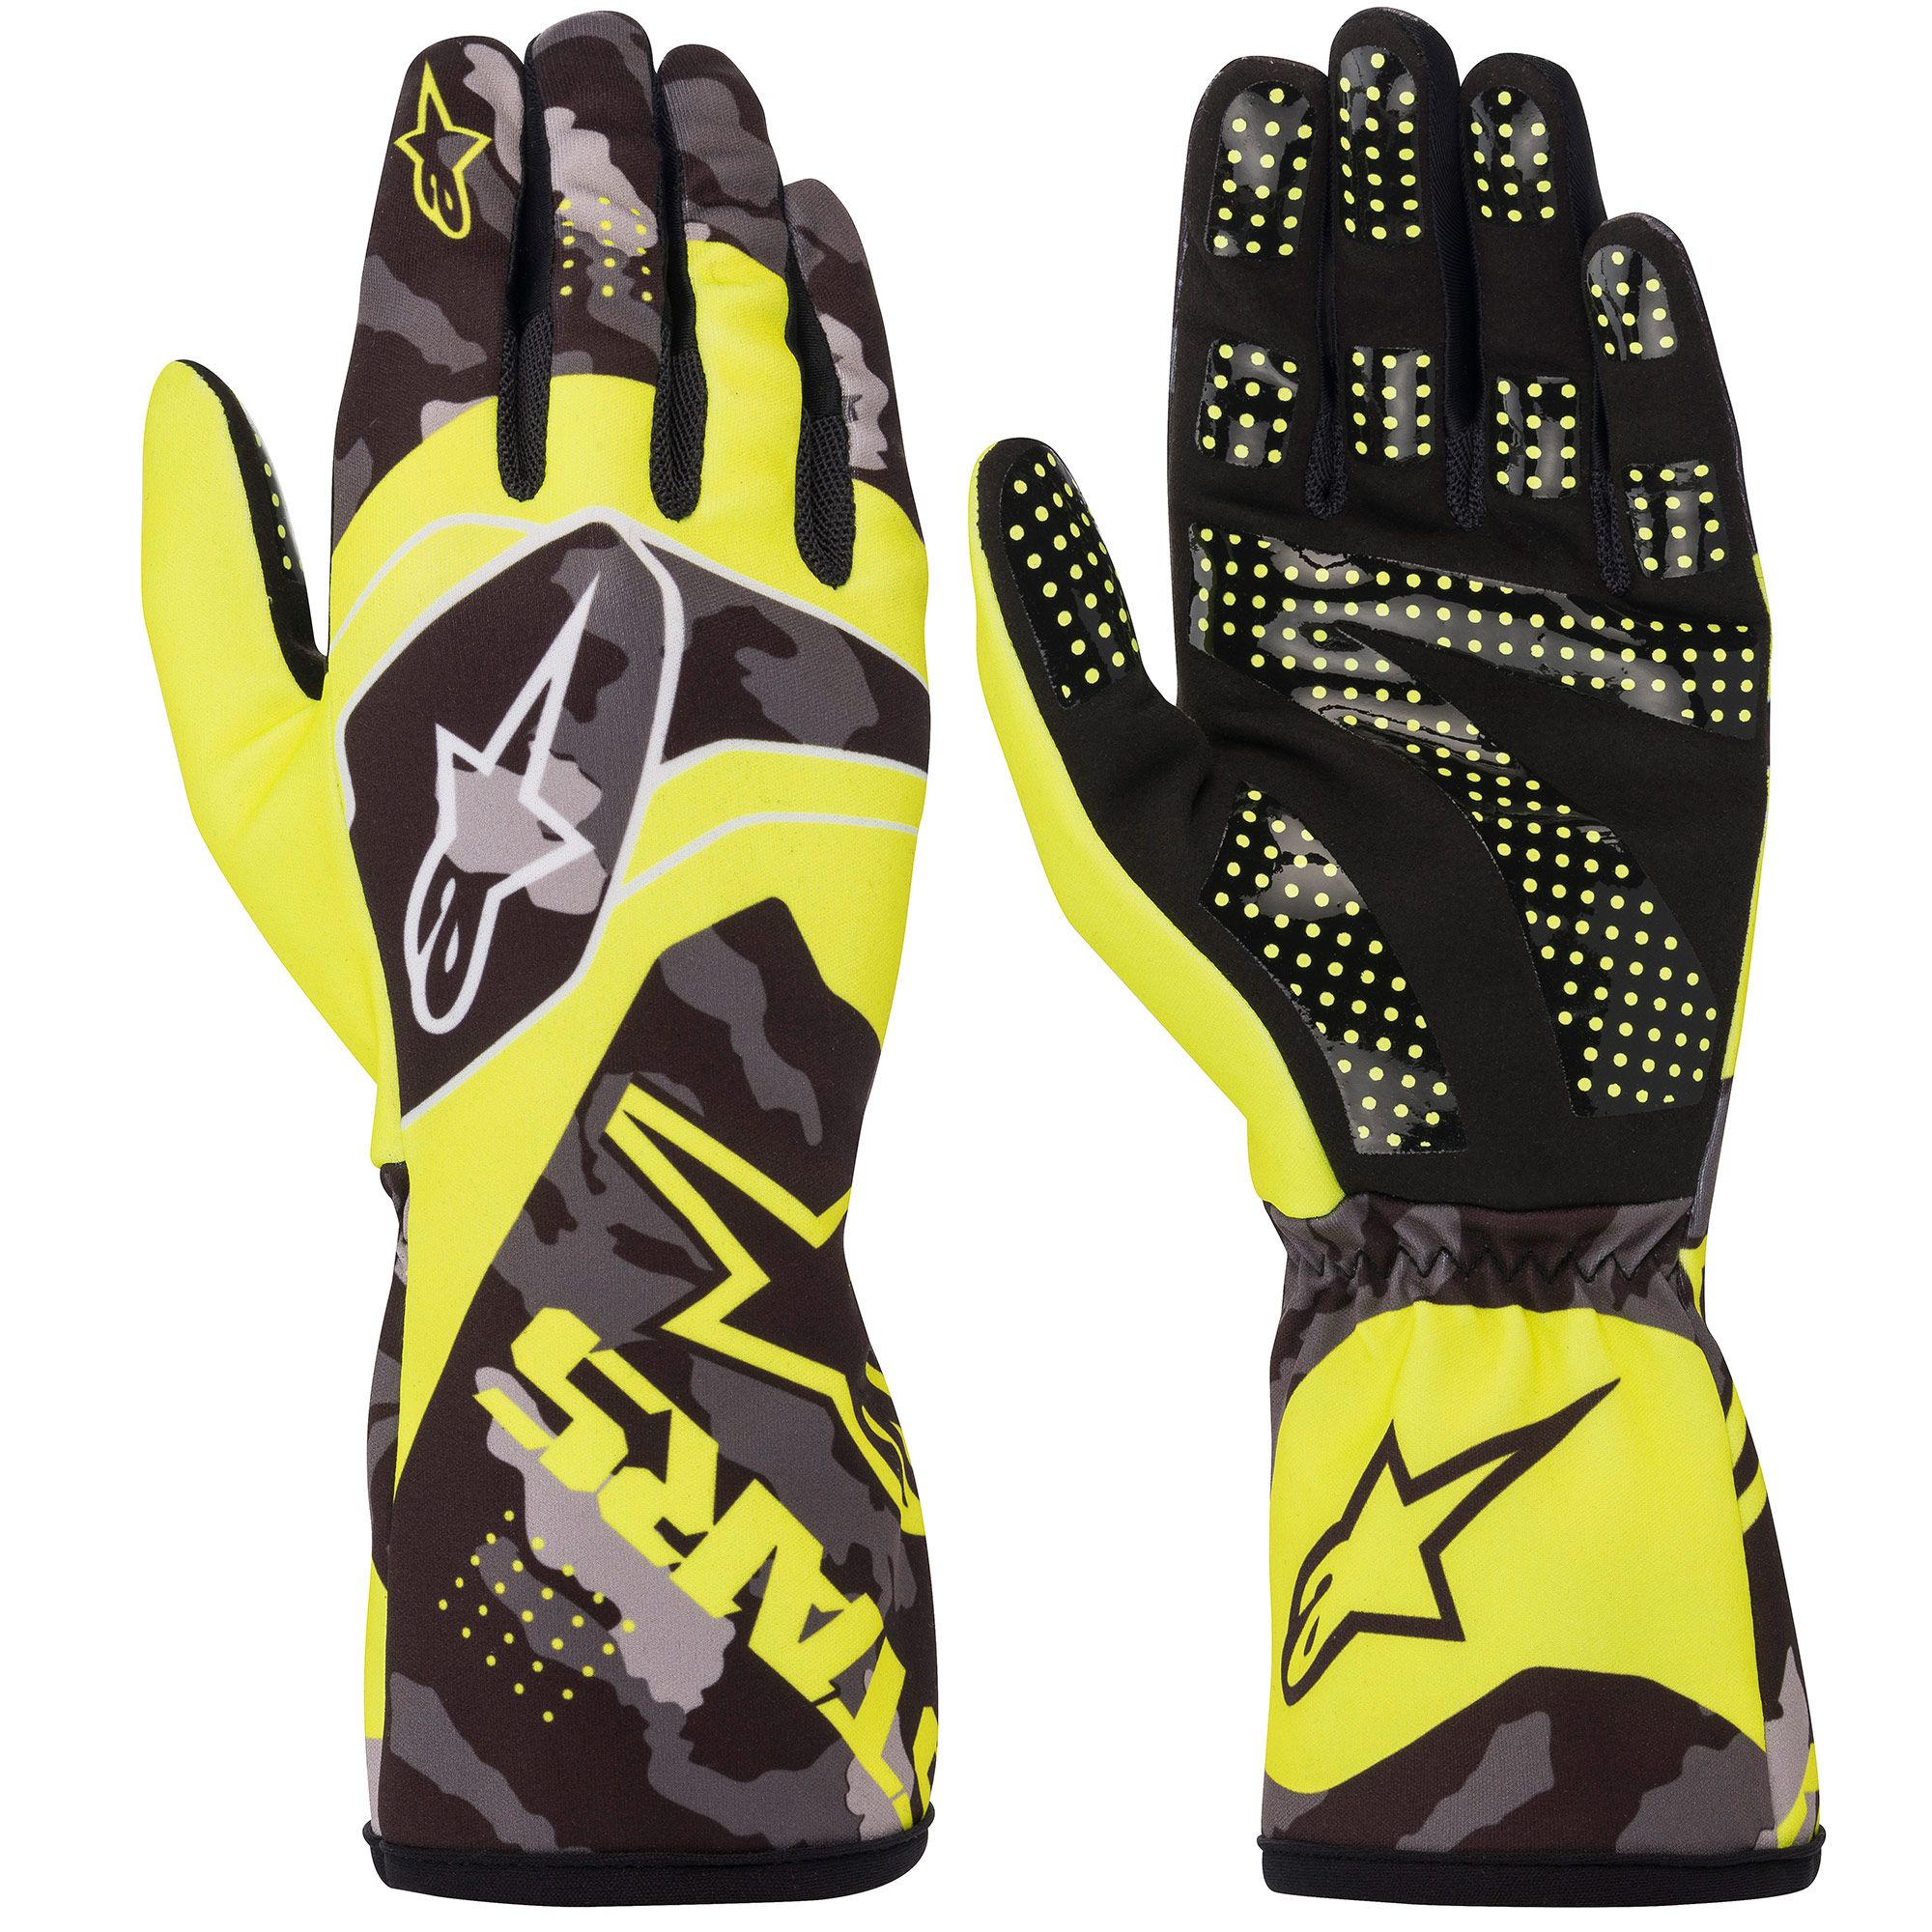 https://www.nicoliniautoaccessori.com/images/stories/virtuemart/product/alp_3552220-551-fr_tech-1-k-race-v2-camo-glove-pair.jpg